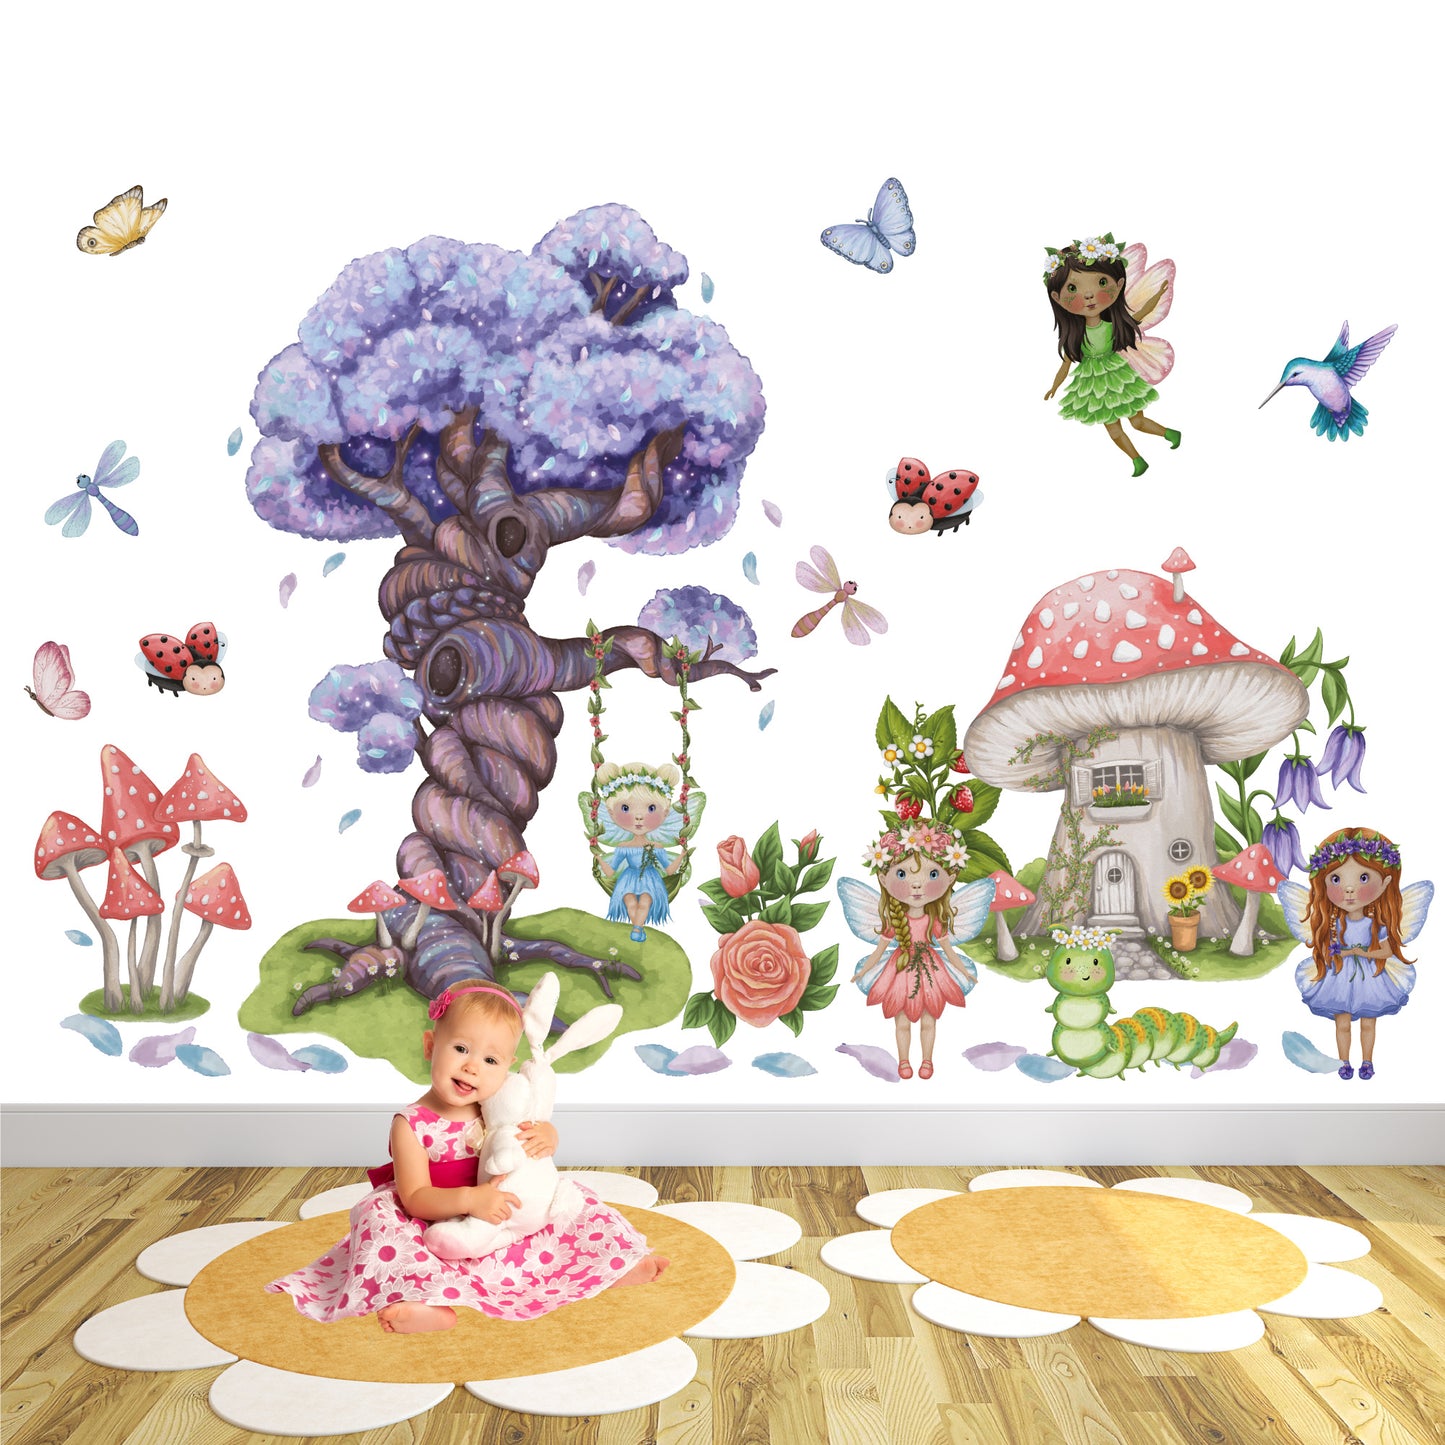 Flower Fairy Magical Tree & Mushroom Home Wall Stickers